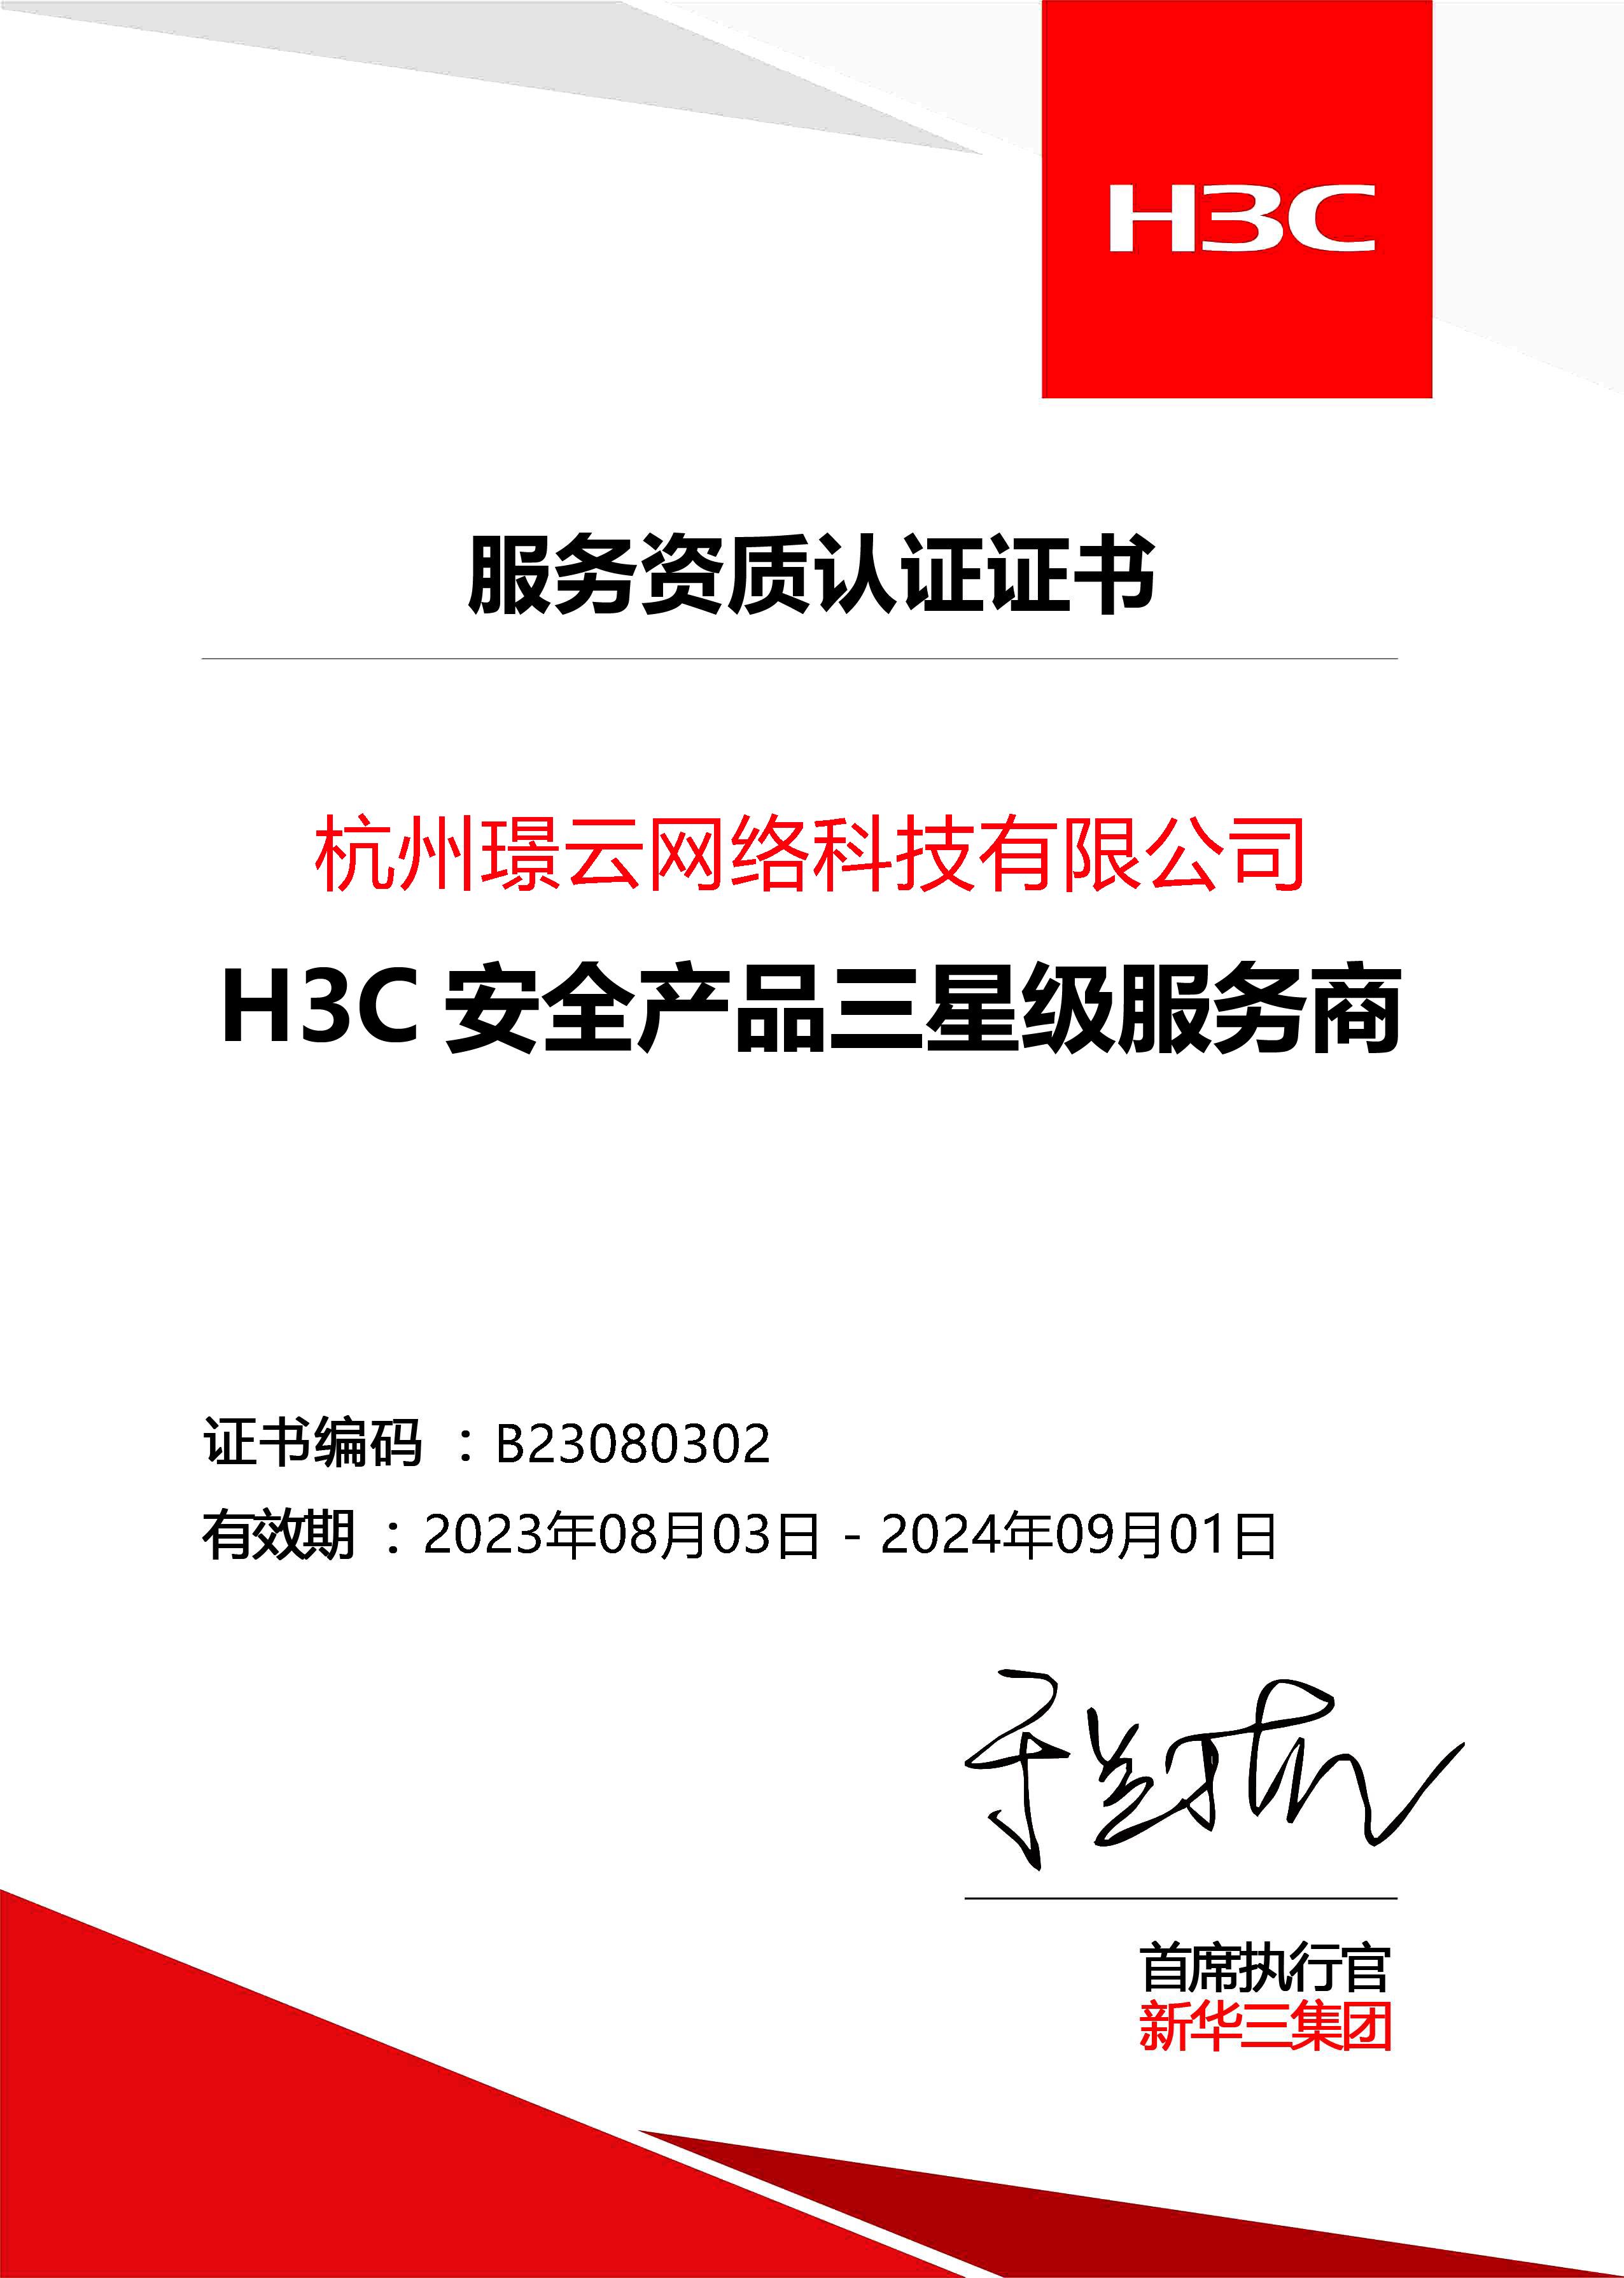 H3C安全産品三星級服務商